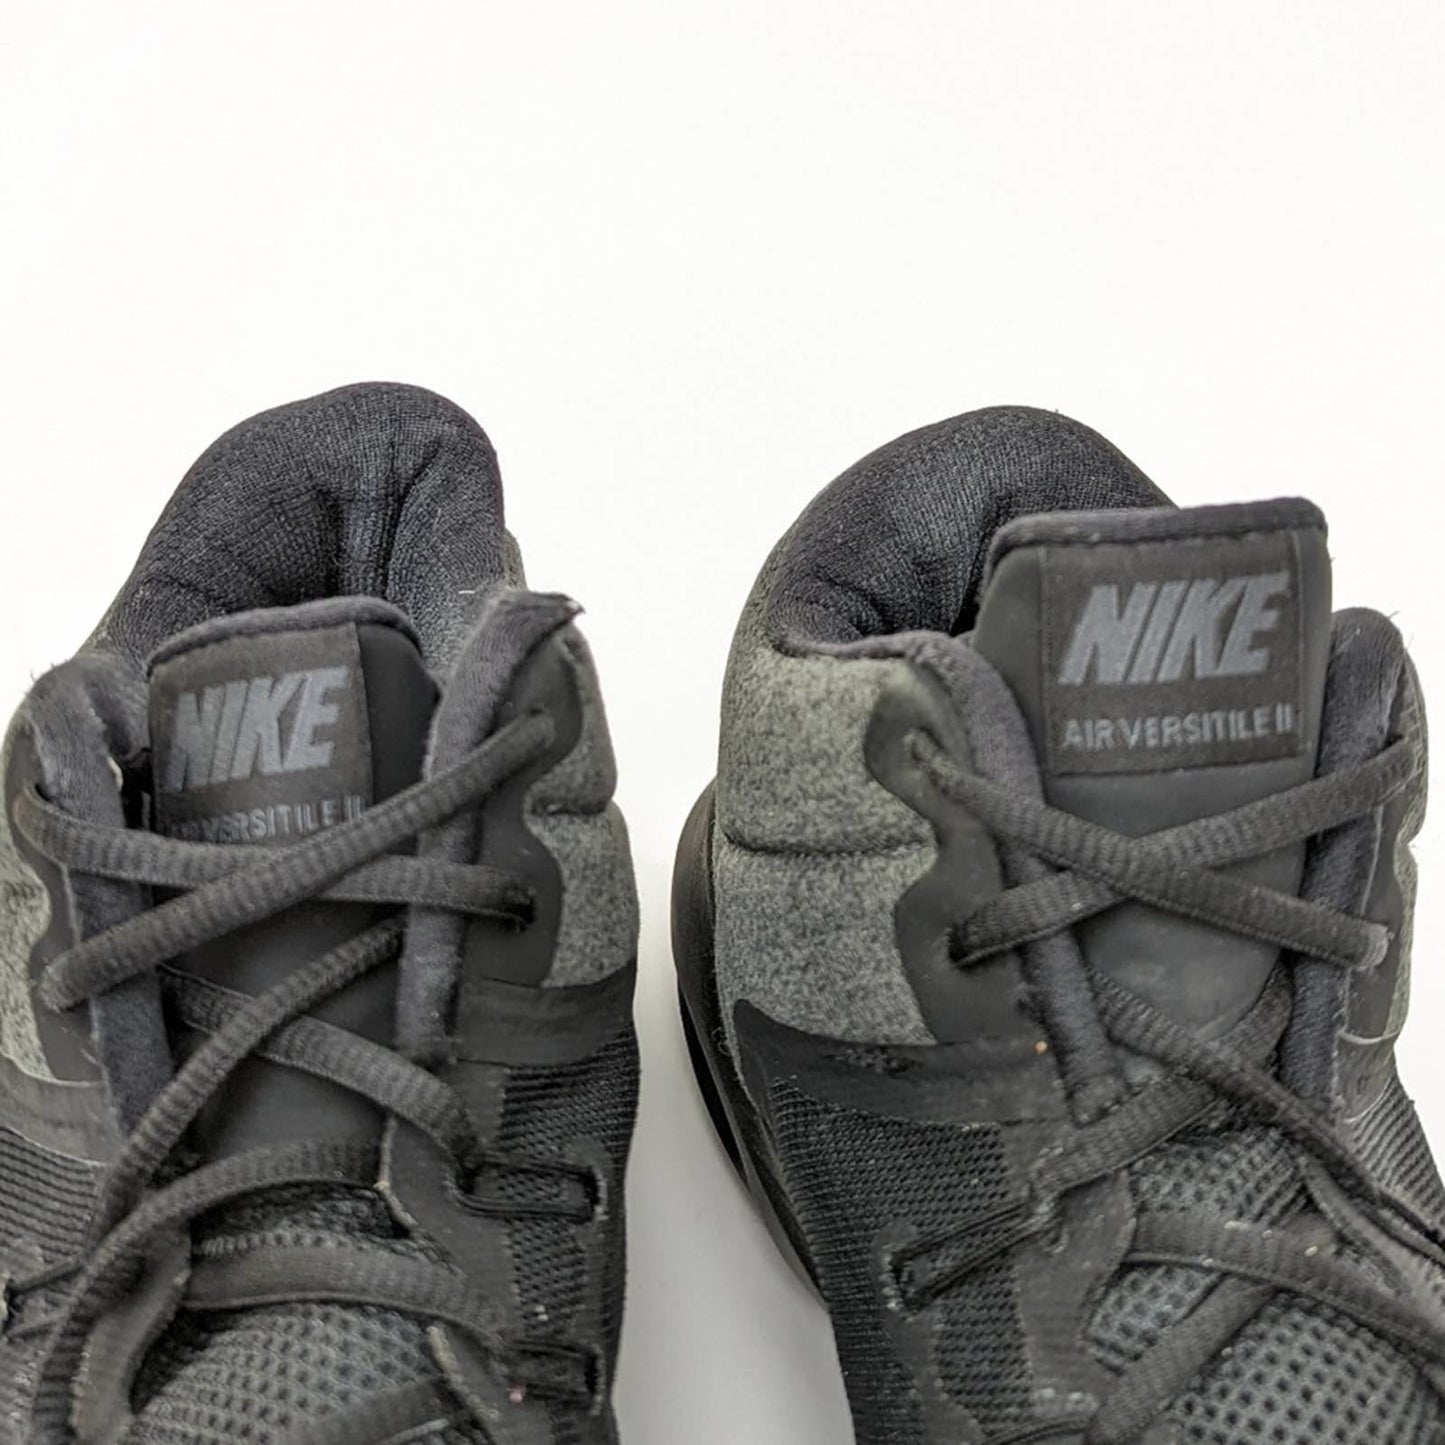 Nike Air Versitile II NBK Triple Black Basketball Shoes - 14